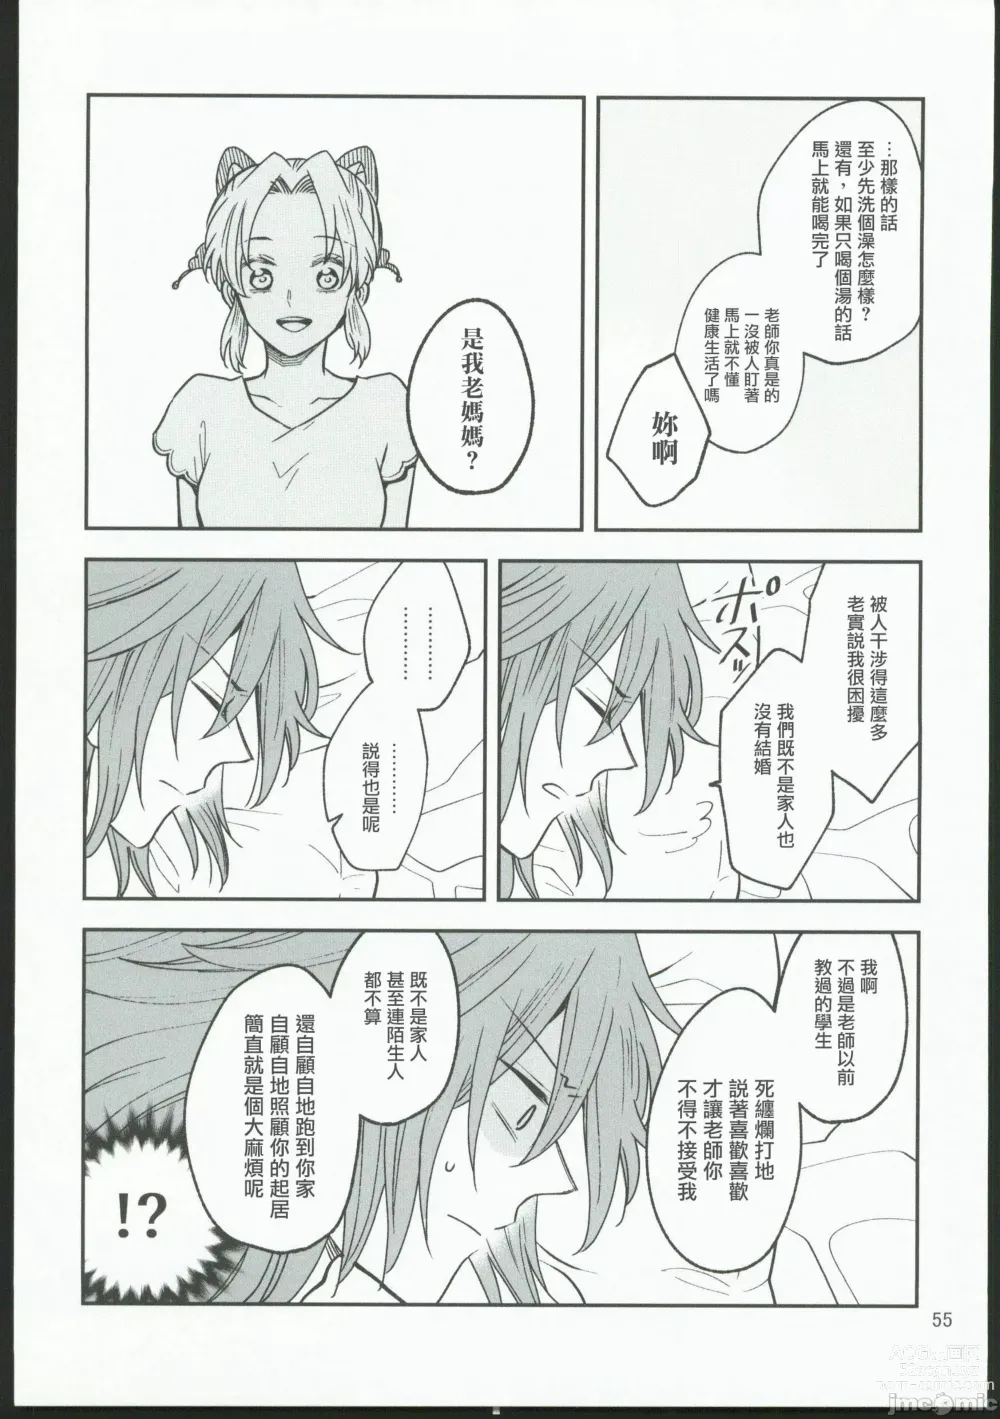 Page 54 of doujinshi Koi Tsumugi